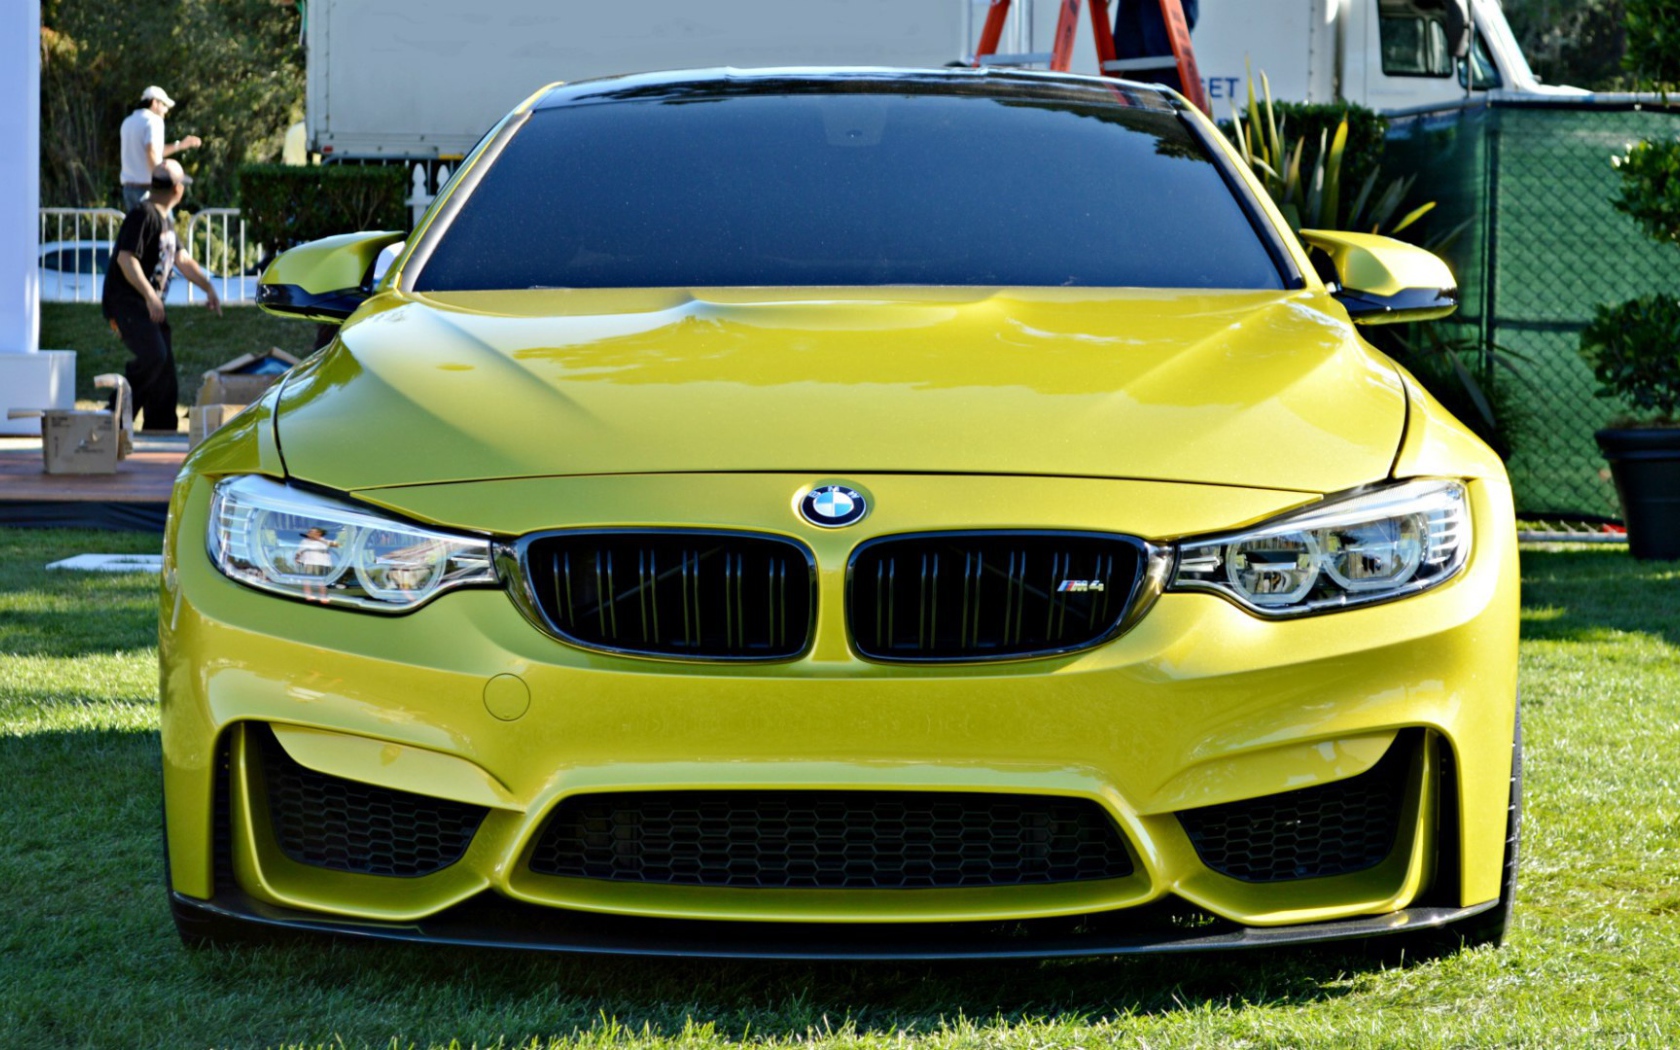 Yellow car BMW M4